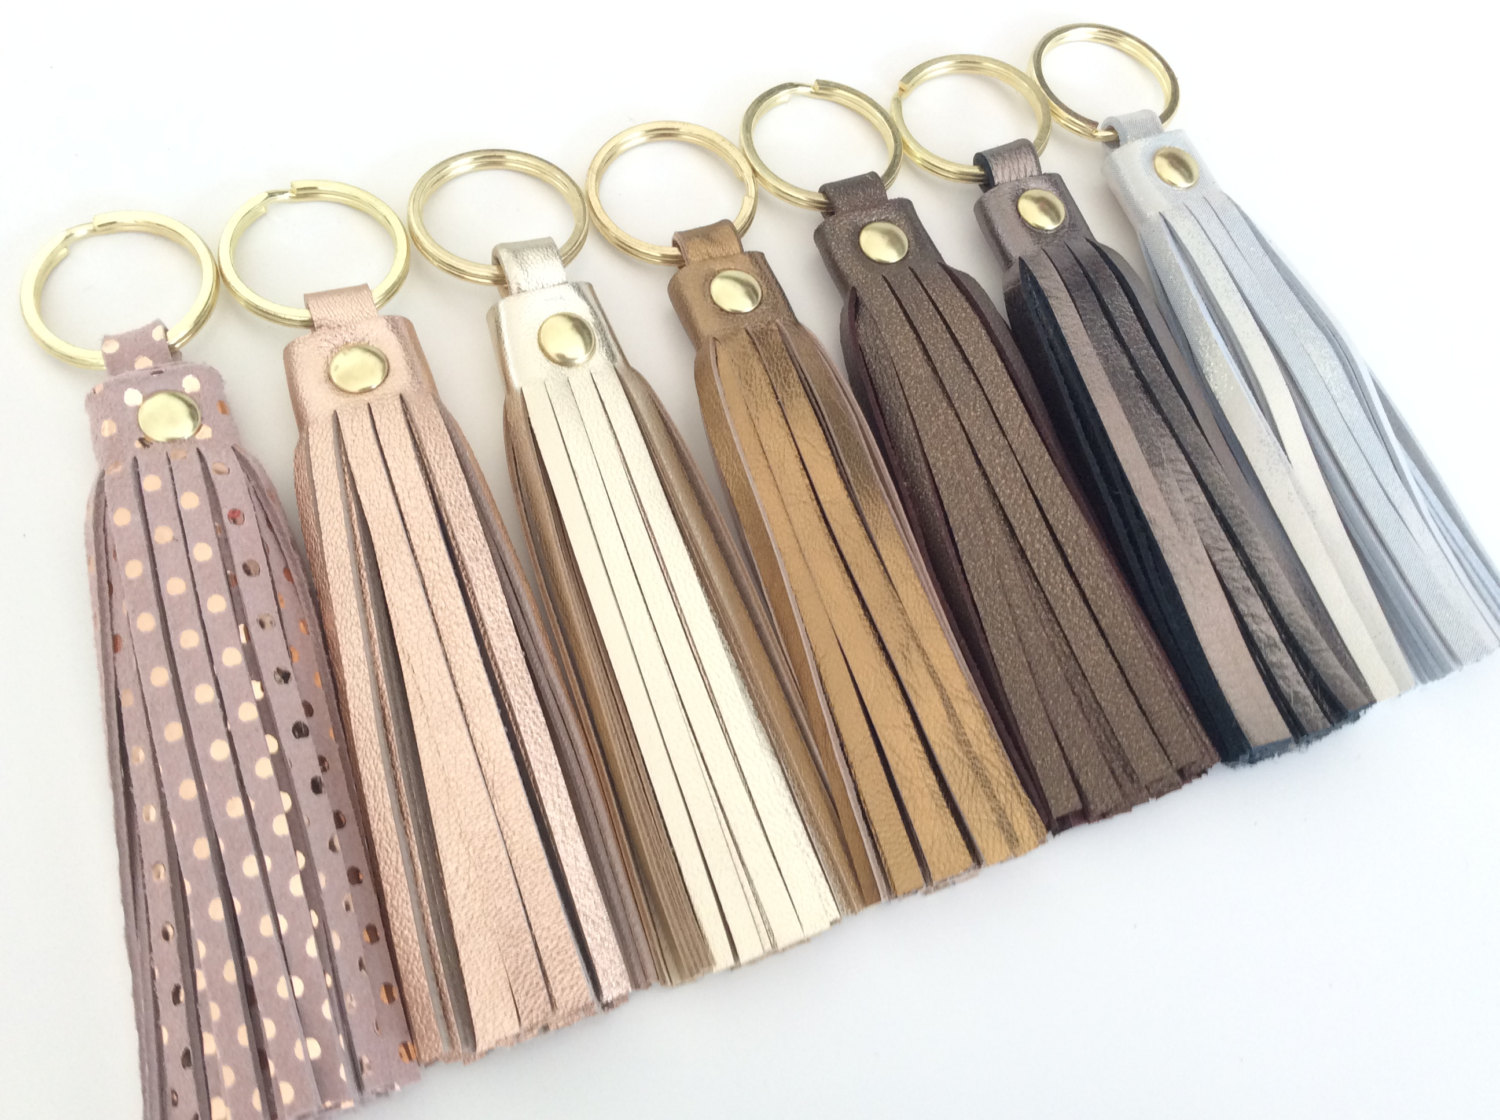 leather tassel keychains via http://etsy.me/2mRQX6m